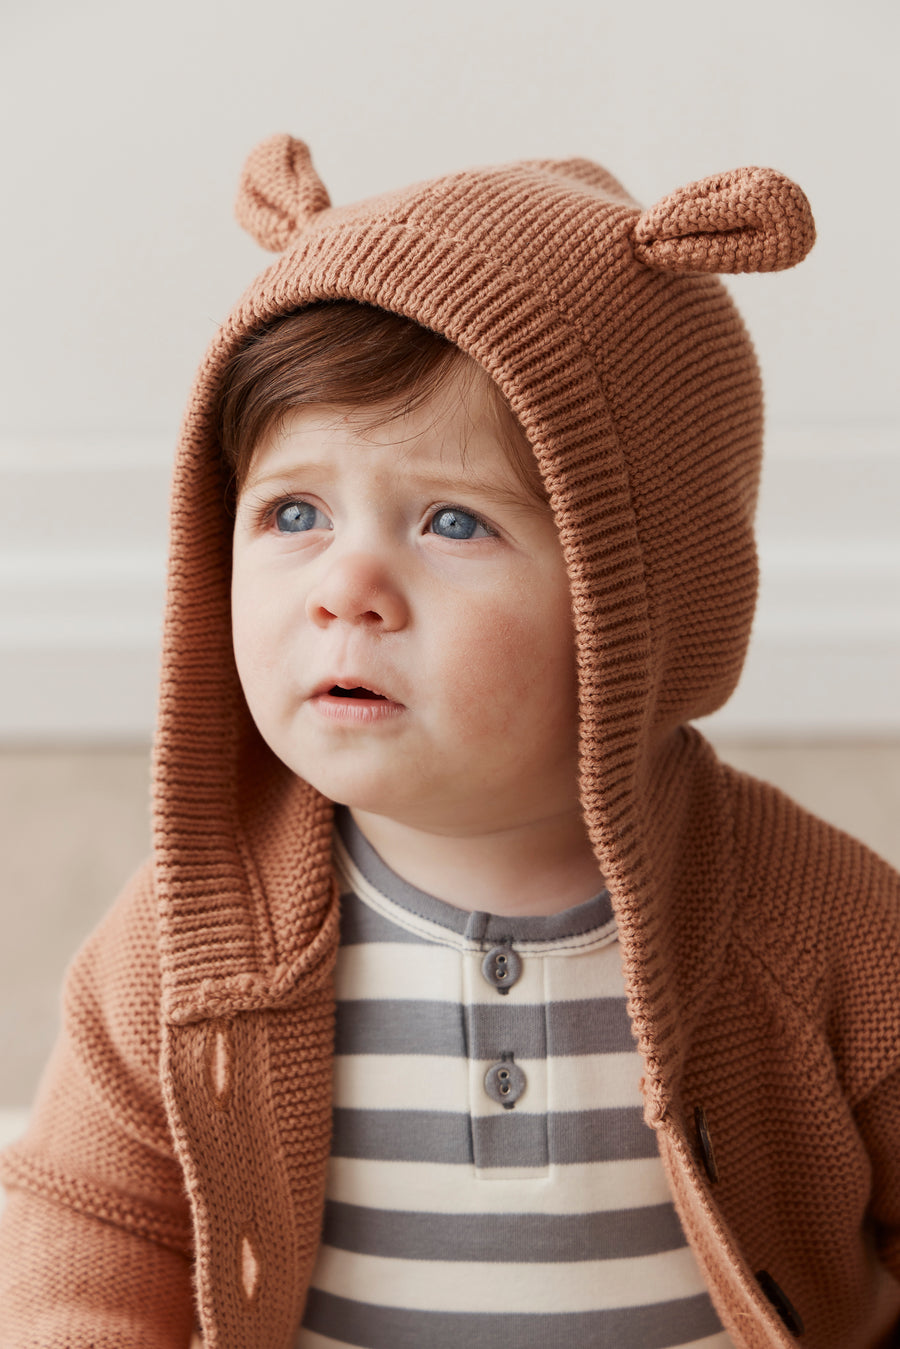 Sebastian Knitted Cardigan/Jacket - Hazelnut Childrens Cardigan from Jamie Kay NZ